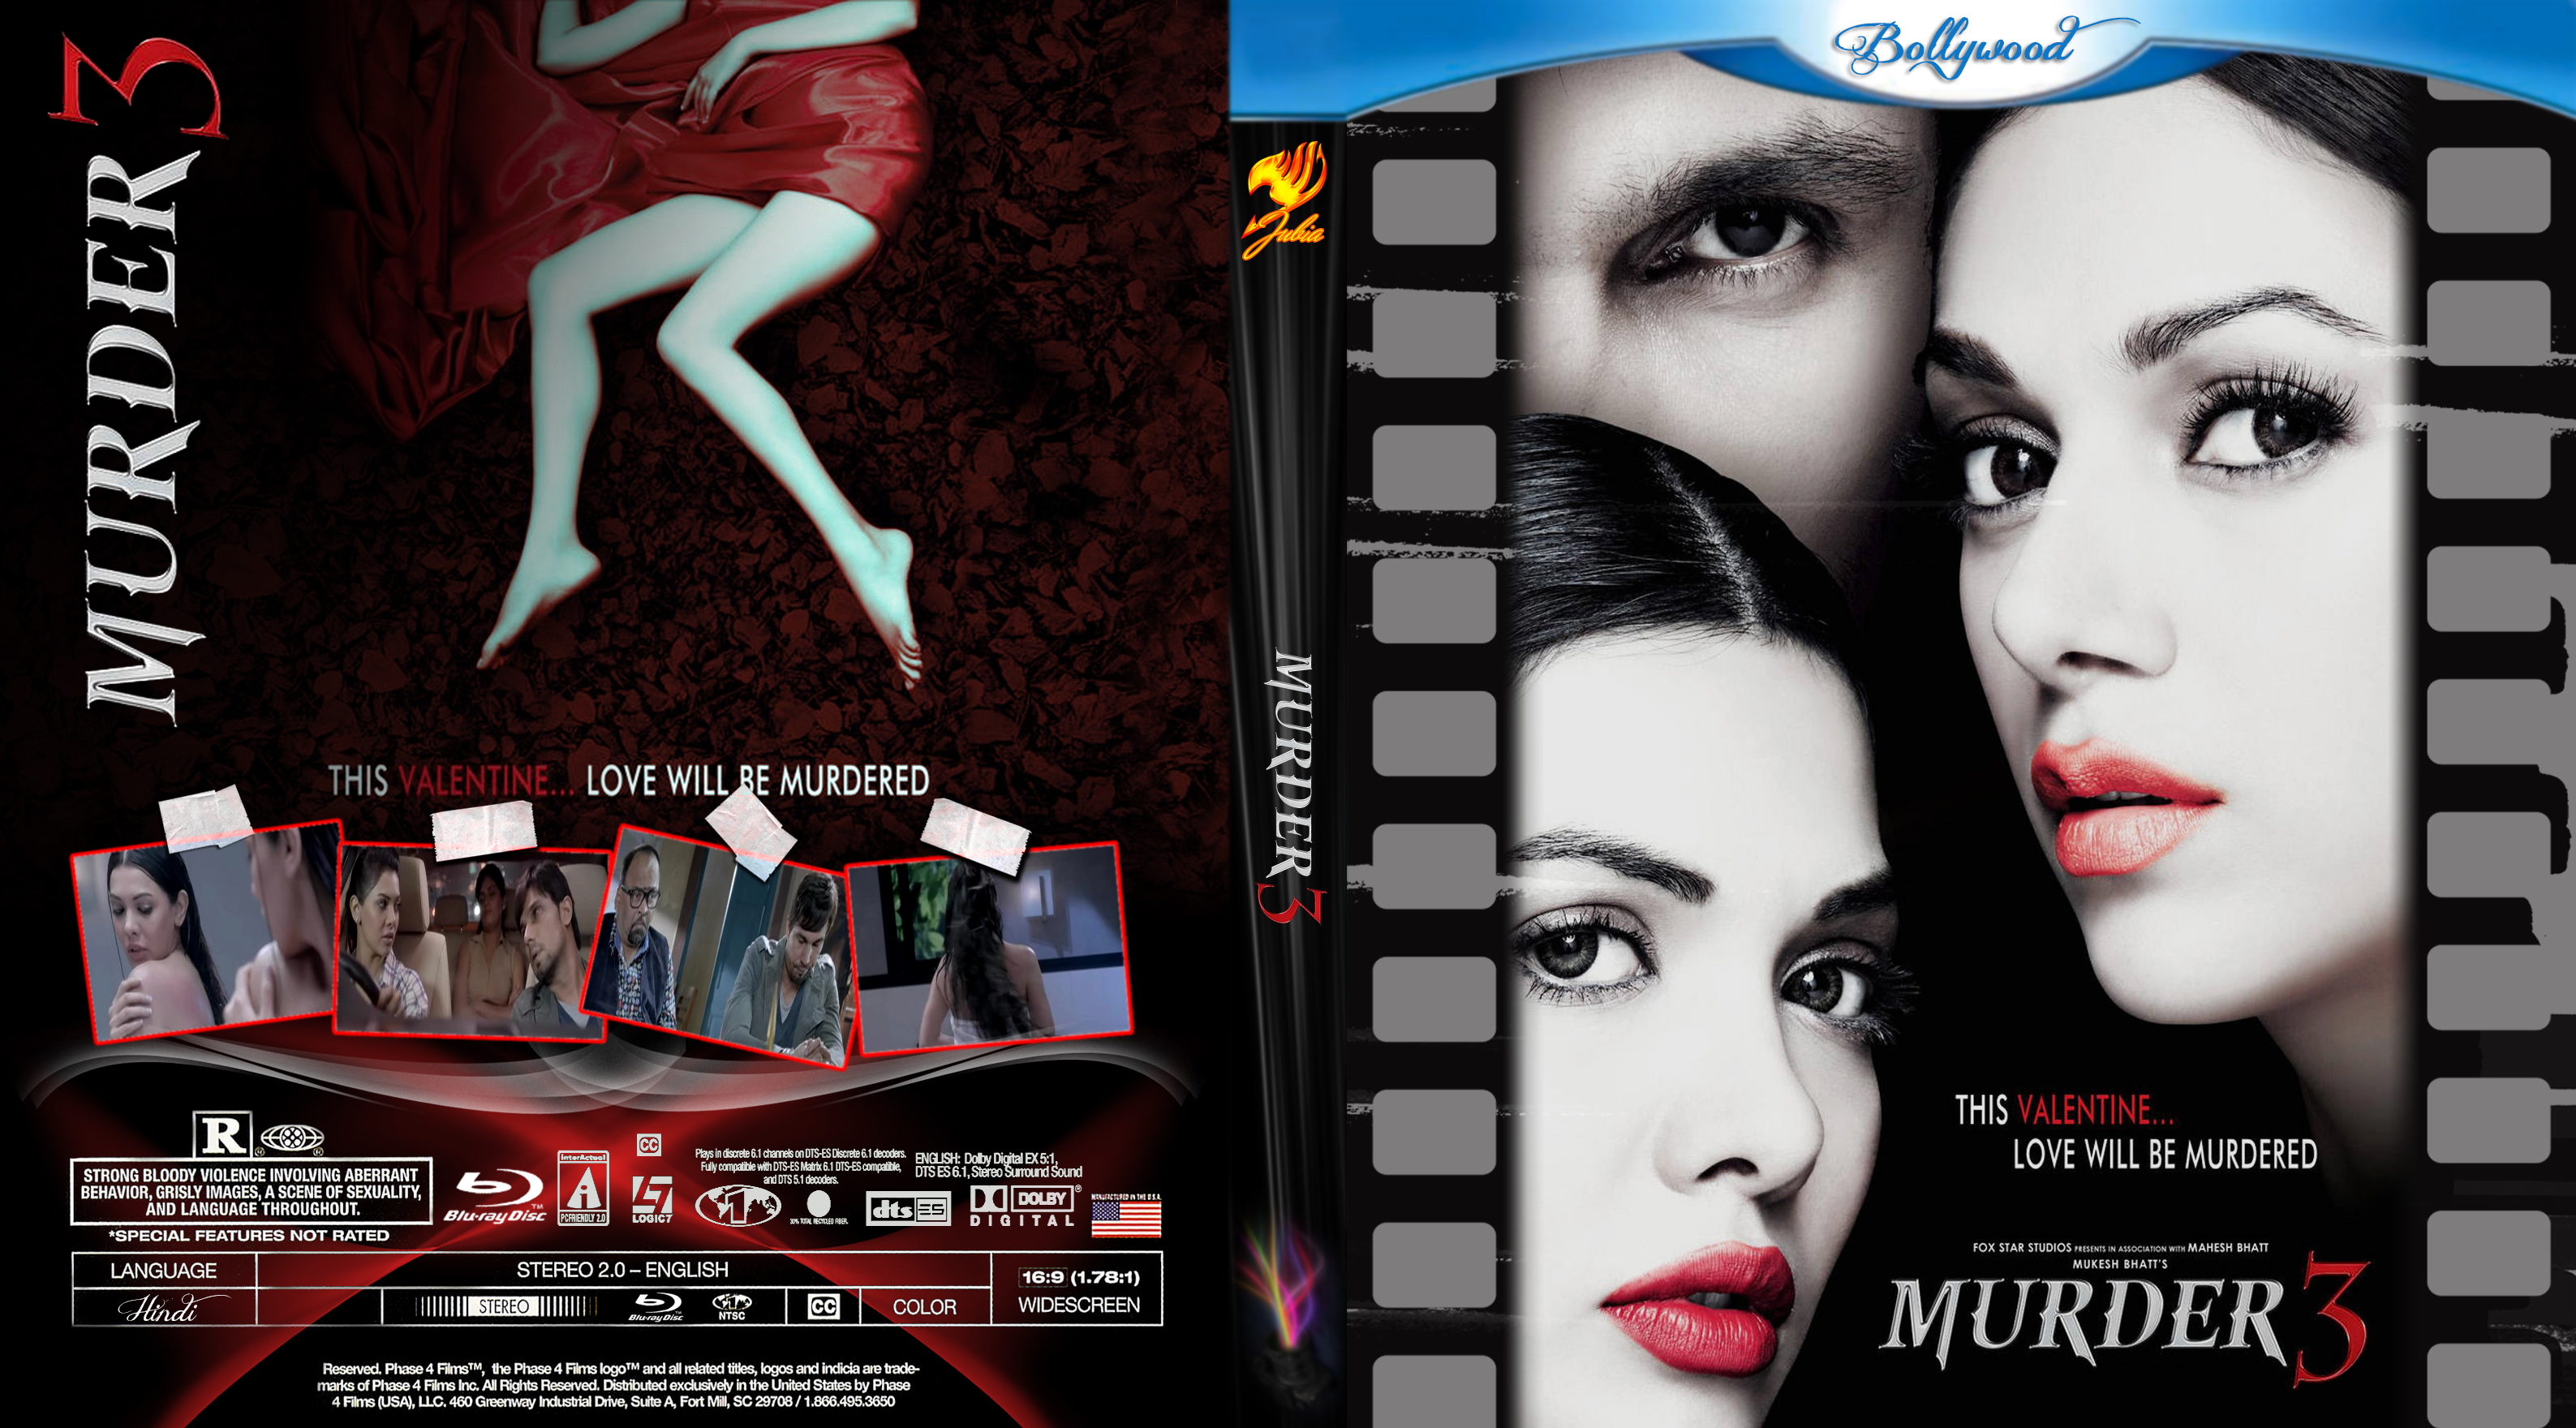 Murderer перевод. Murder Plot обложка. Murder 3. Preppie Murder обложка DVD. Murder at 1600 обложка DVD.